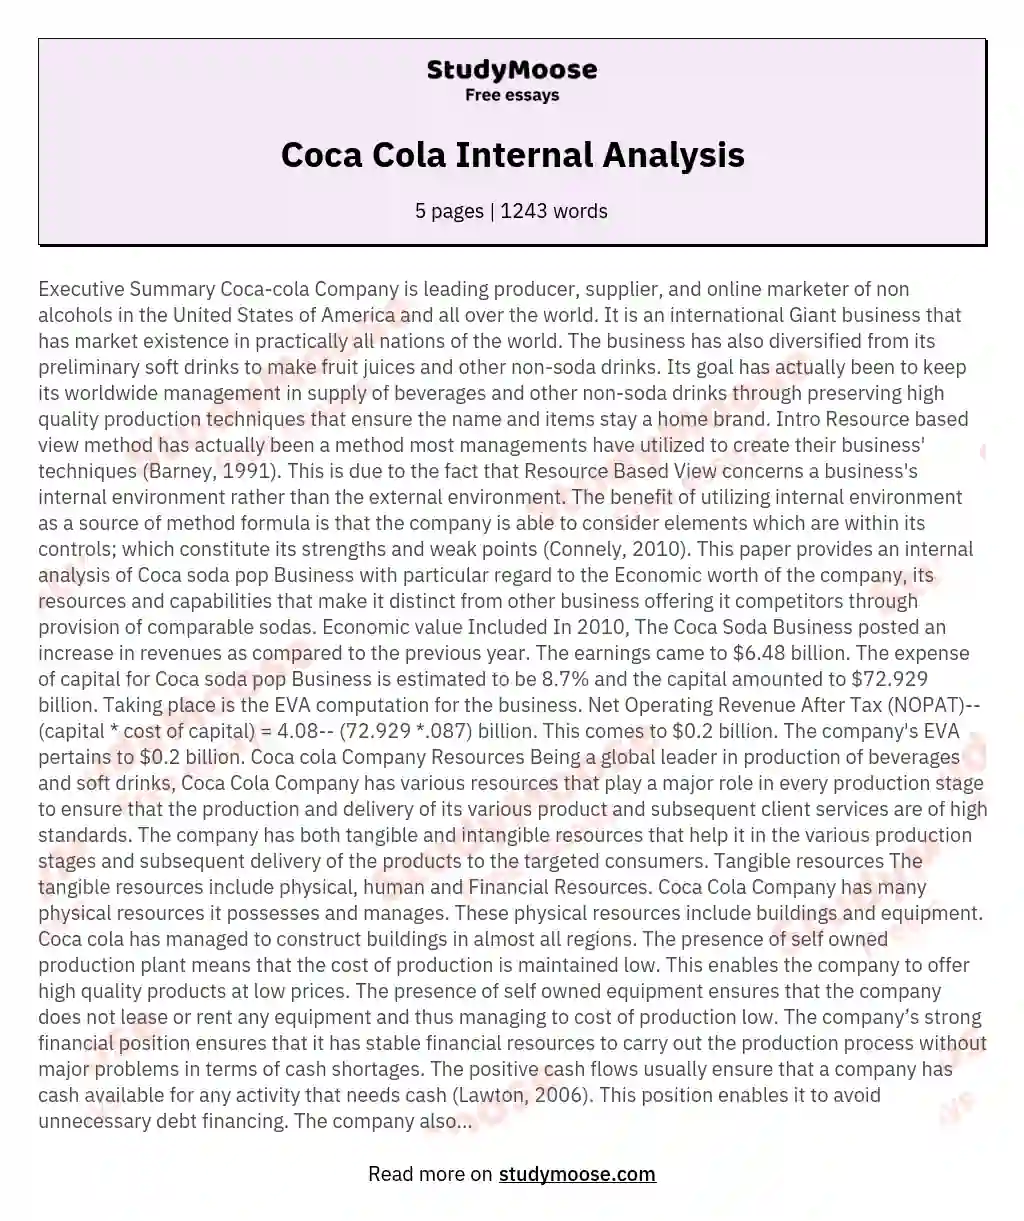 Coca Cola Internal Analysis essay